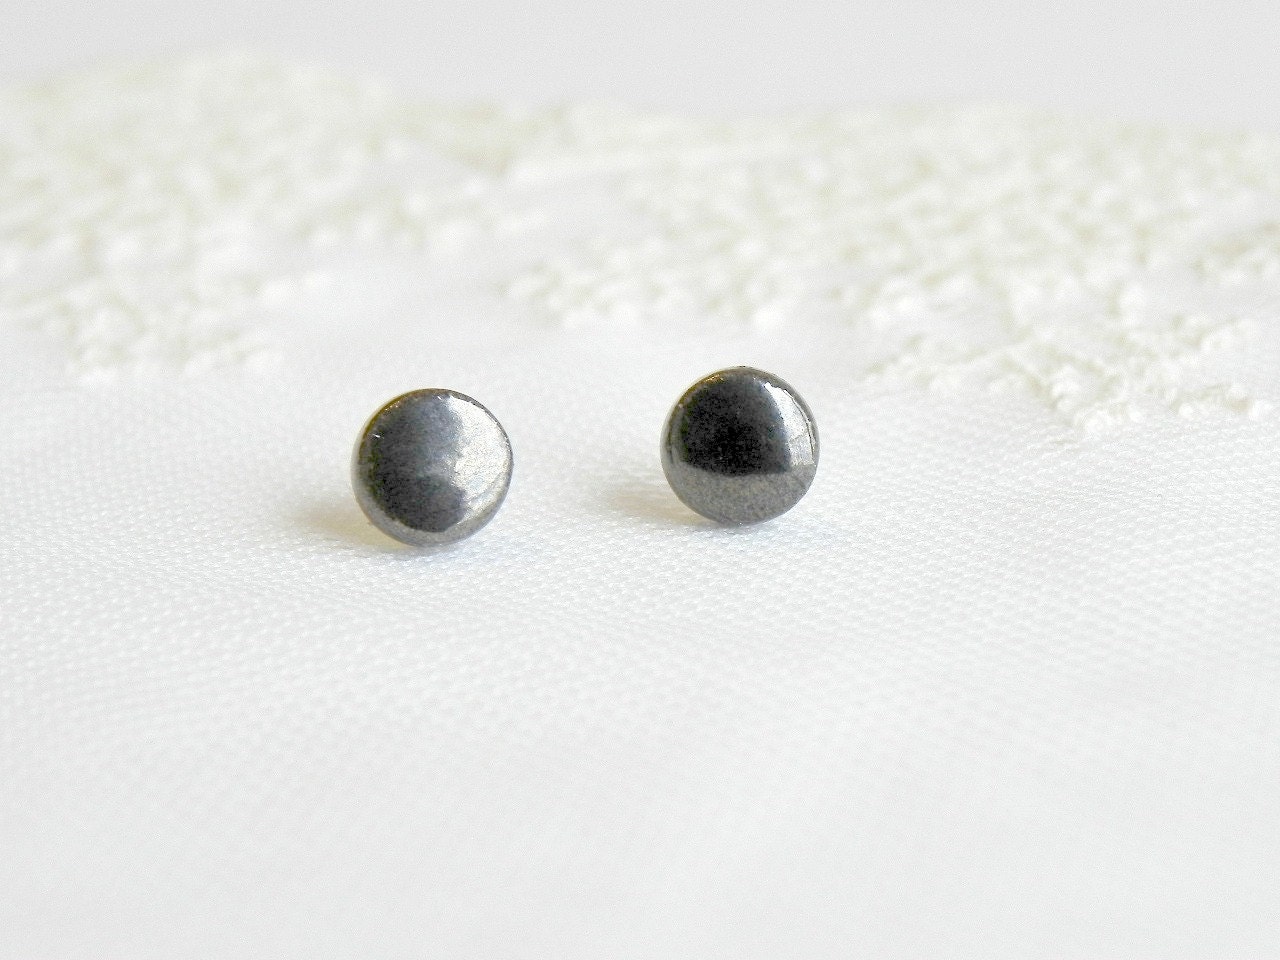 Tiny Stud Earrings Bronz Black Ceramic Round Post Unisex Jewelry Surgical Steel